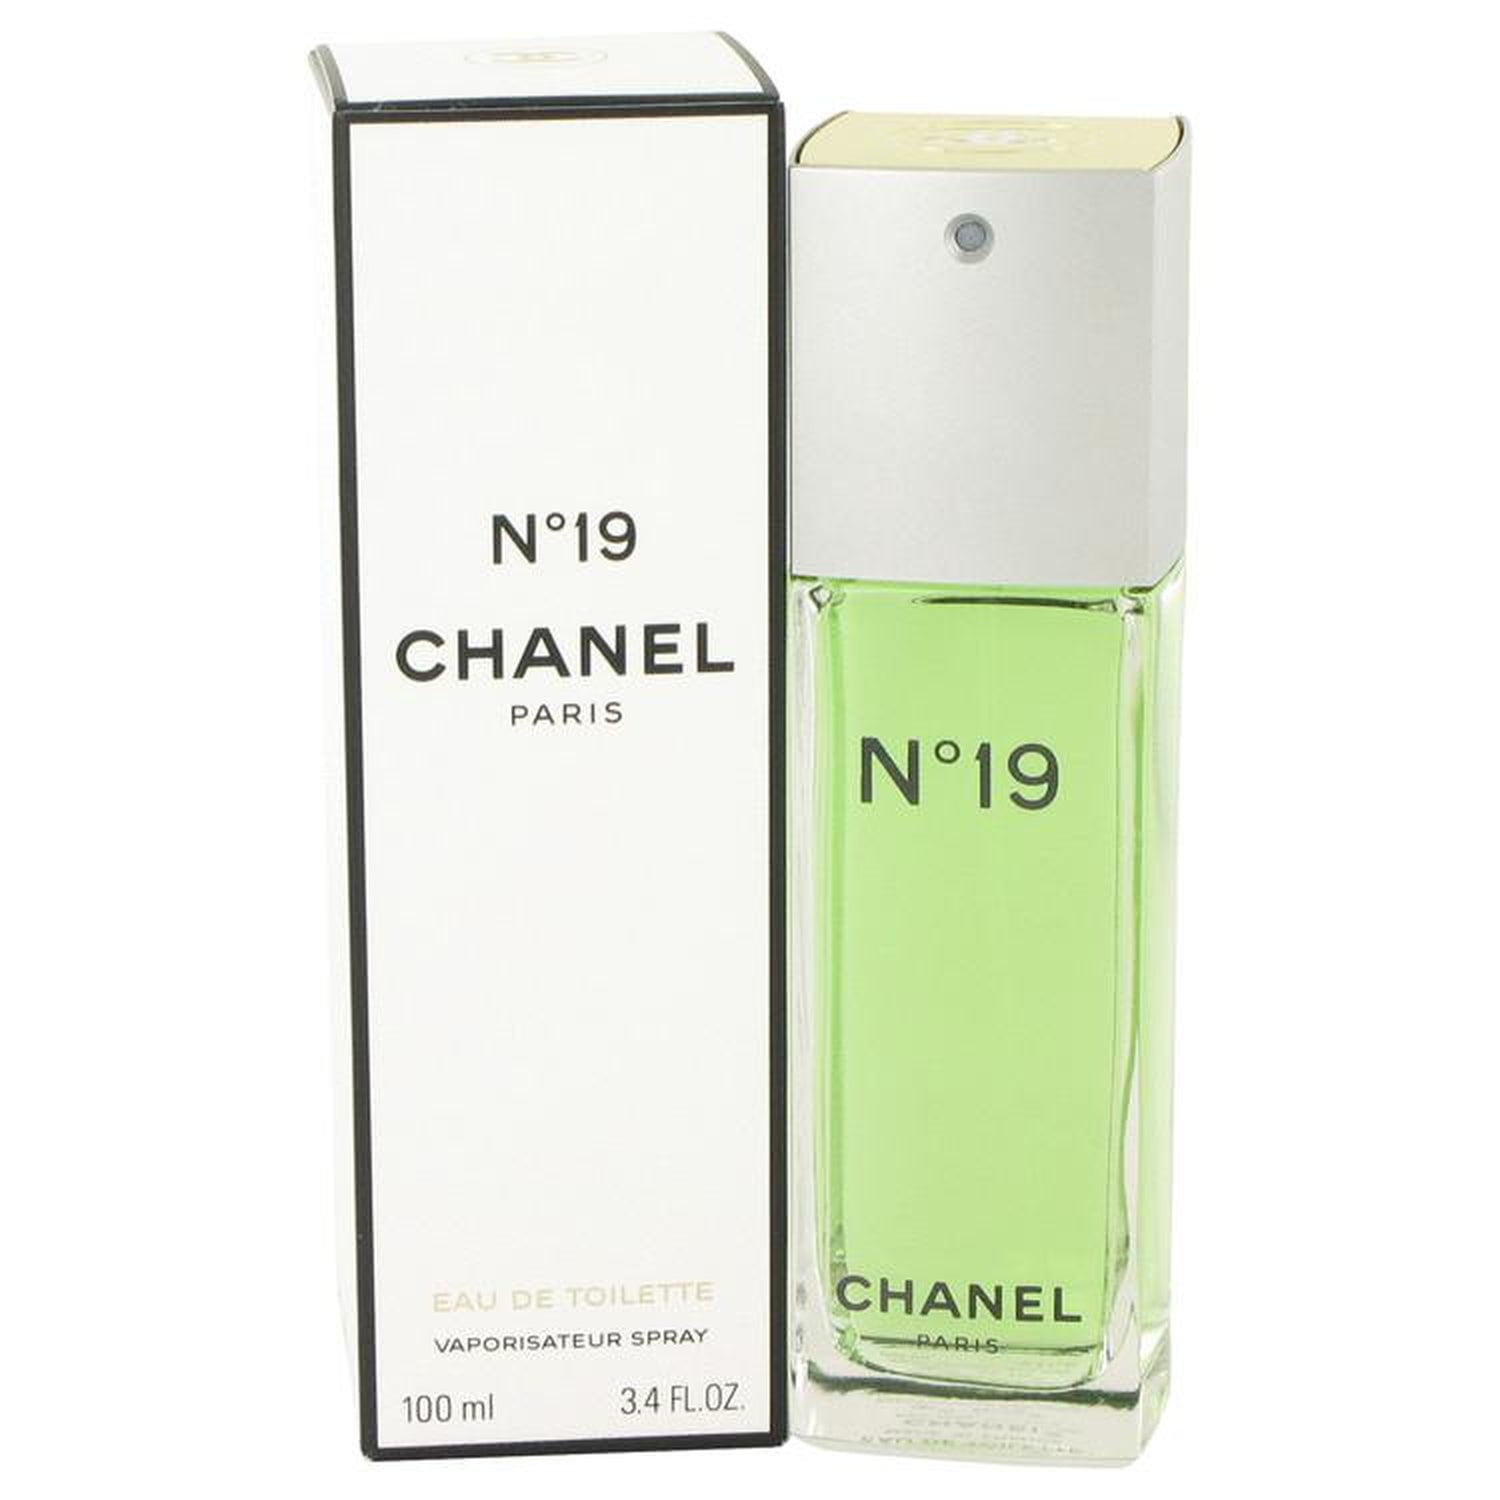 Chanel No19 edt 100ml Best Price  Compare deals at PriceSpy UK